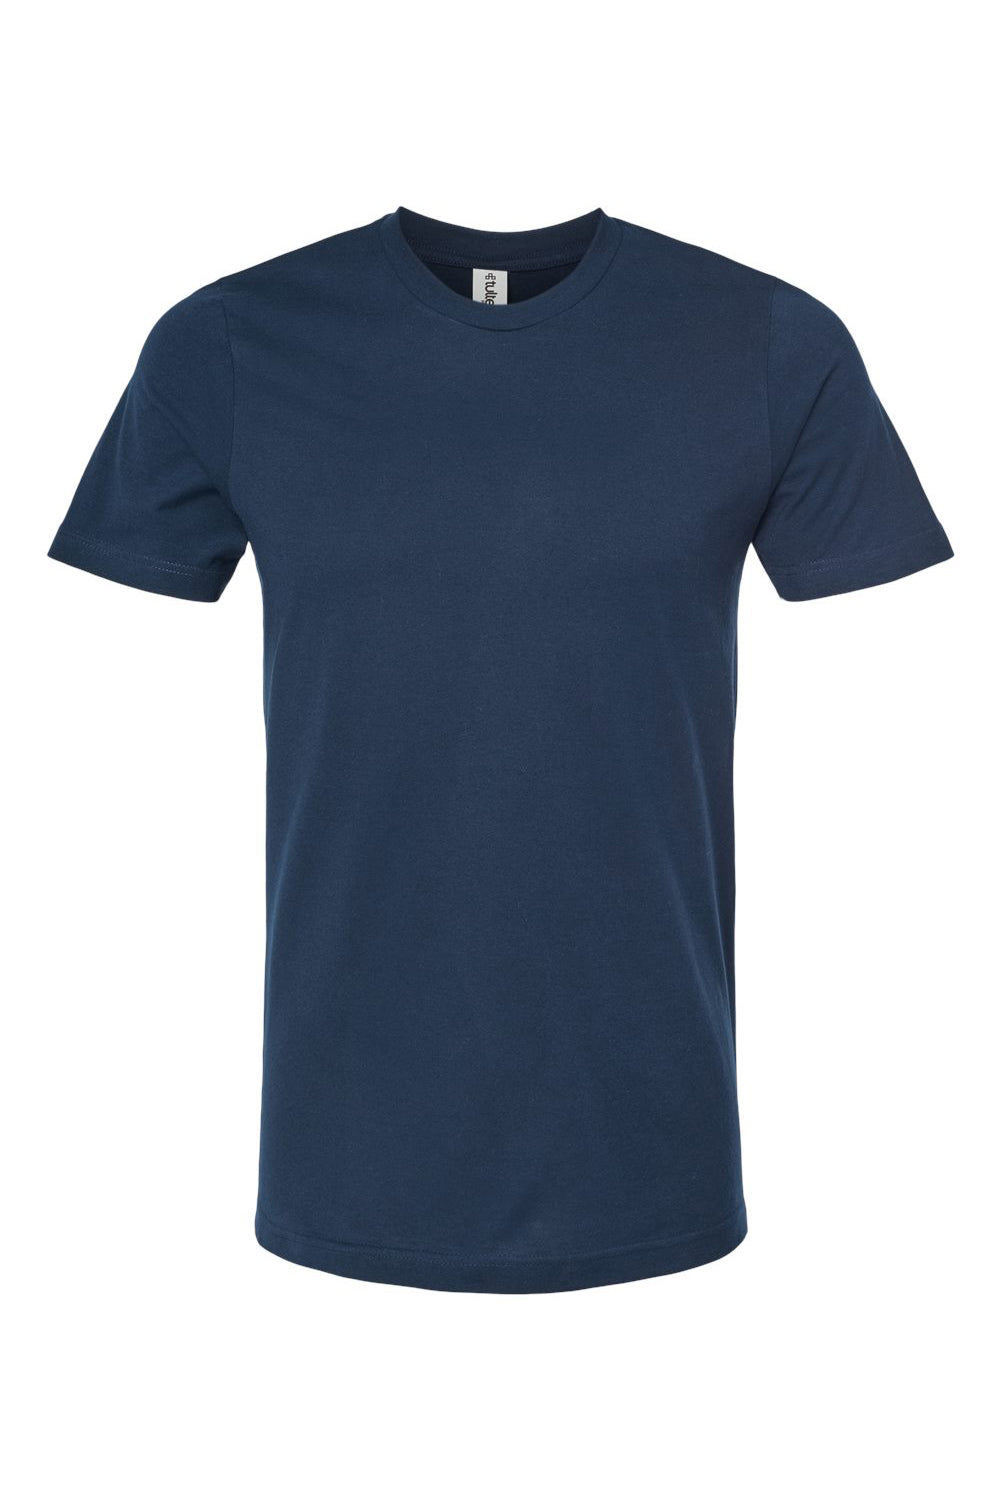 Tultex 502 Mens Premium Short Sleeve Crewneck T-Shirt Navy Blue Flat Front